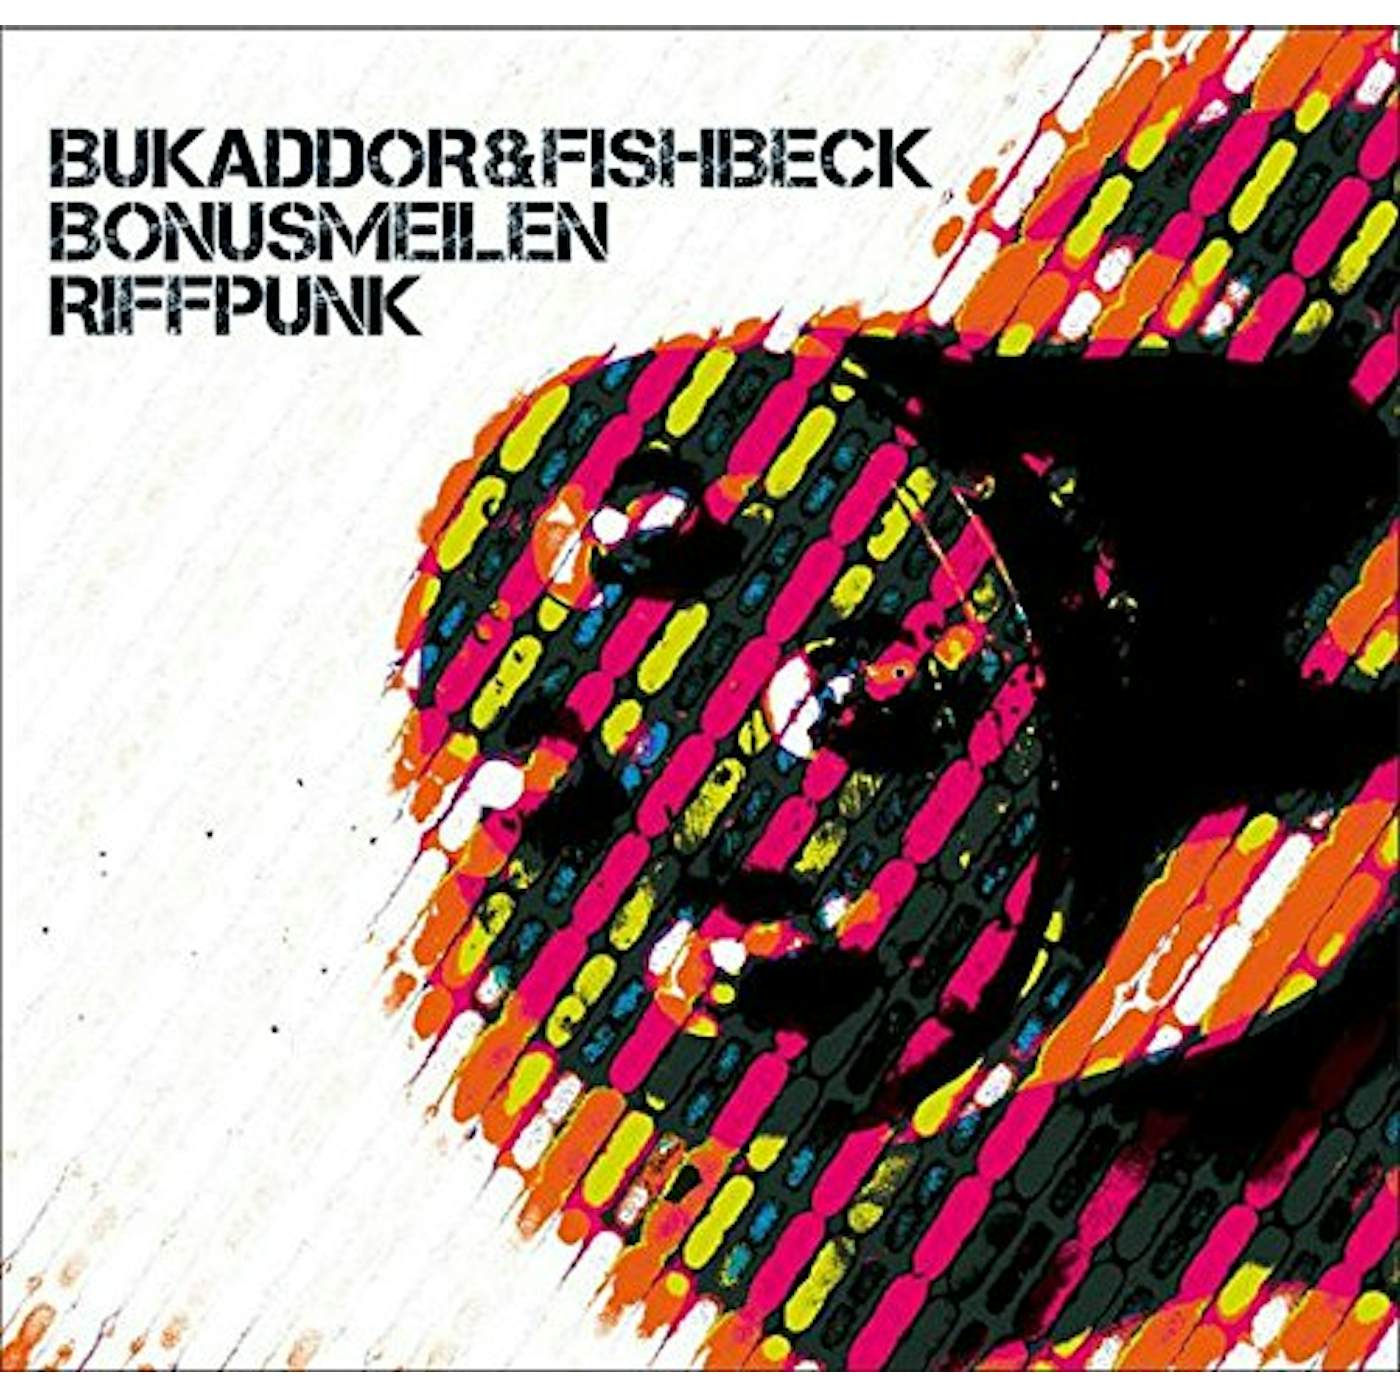 Bukaddor & Fishbeck BONUSMEILEN / RIFFPUNK Vinyl Record